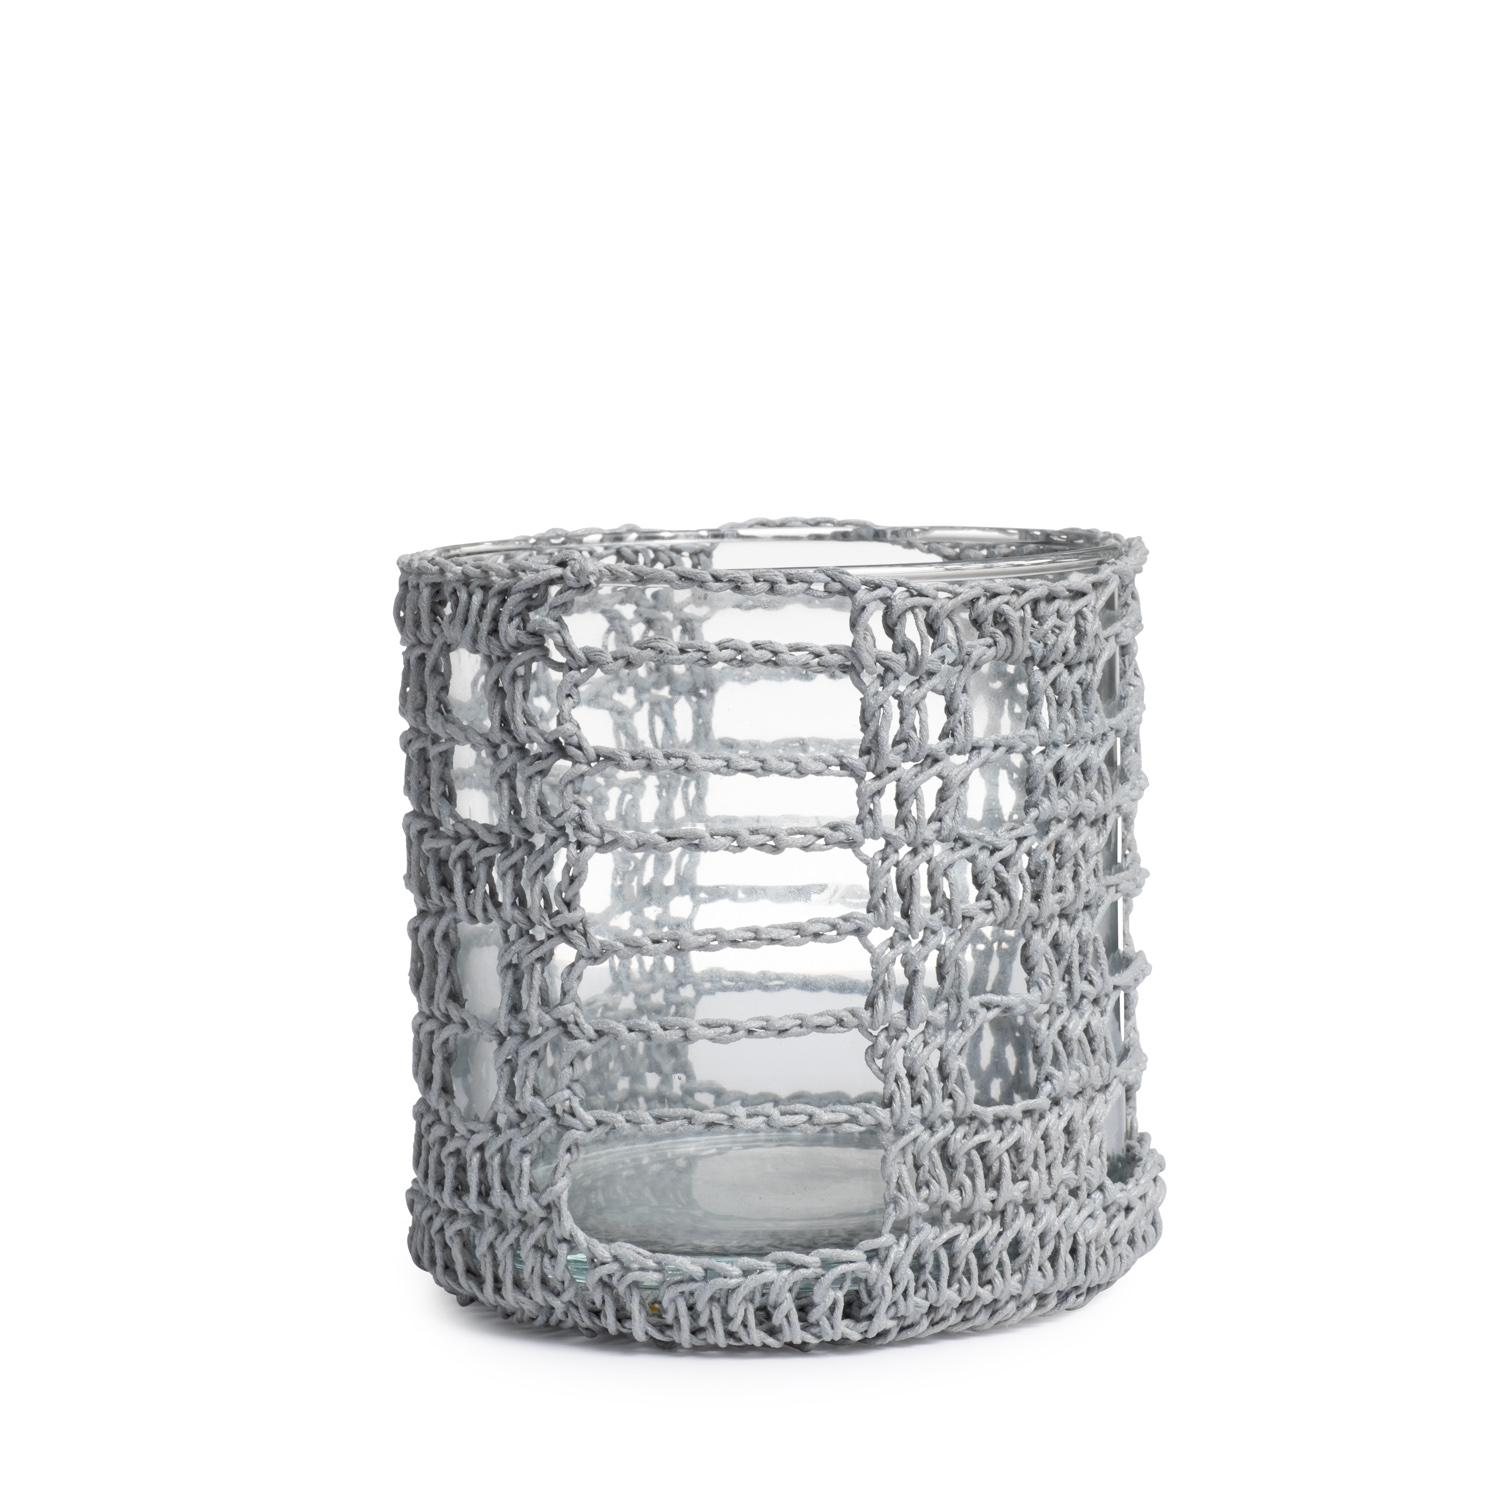 Crocheted Mesh Basket Cylinder - Large - Grey